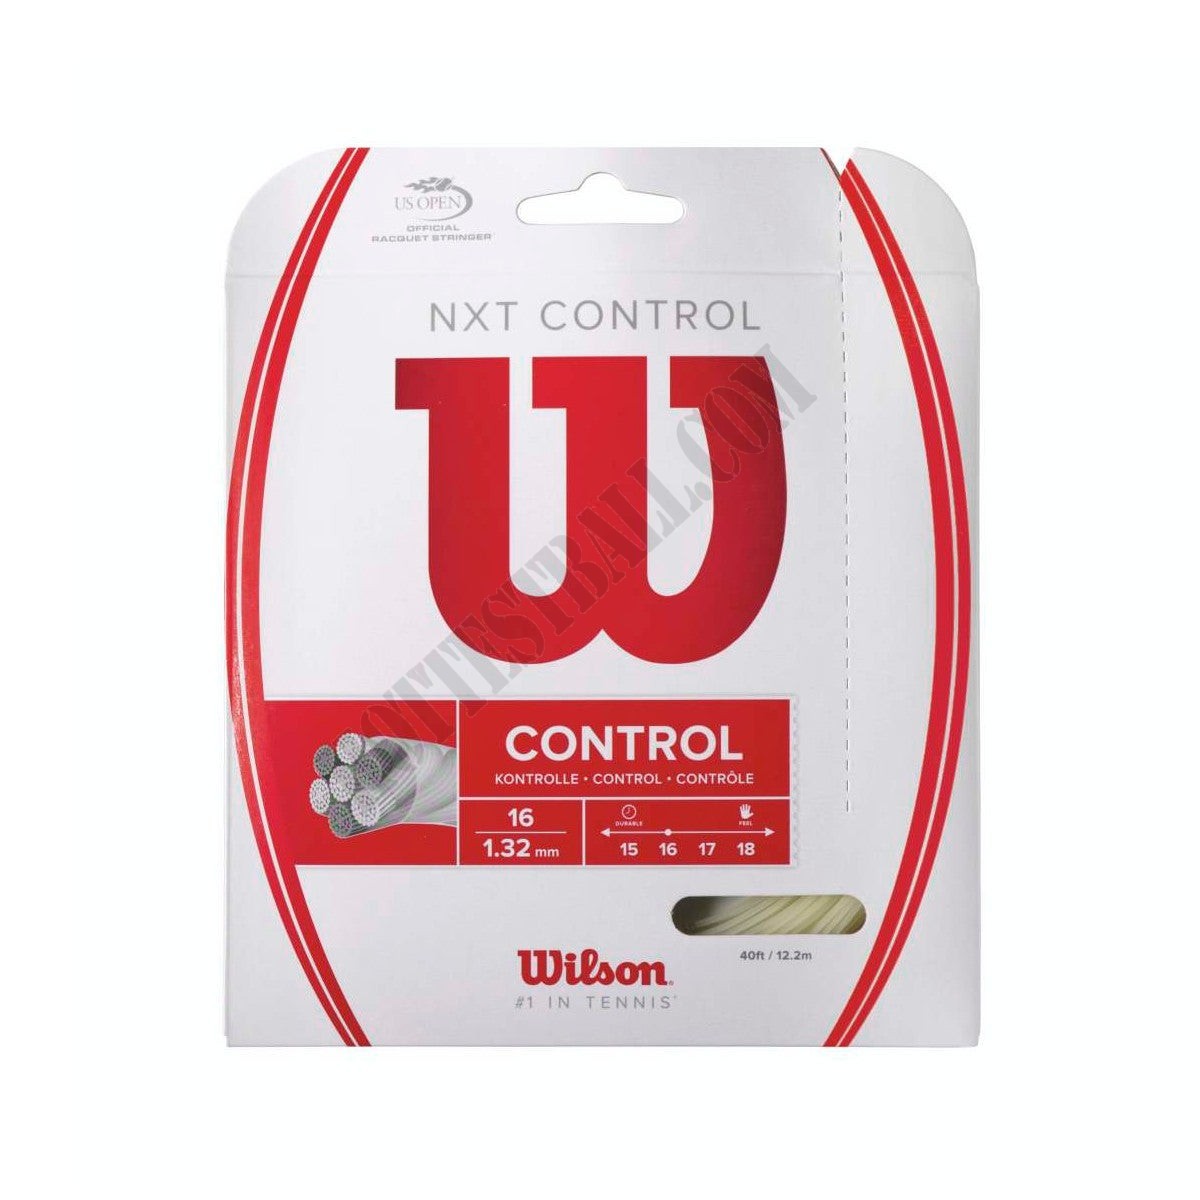 NXT Control String Set - Natural, 16 GA (1.30mm) - Wilson Discount Store - NXT Control String Set - Natural, 16 GA (1.30mm) - Wilson Discount Store